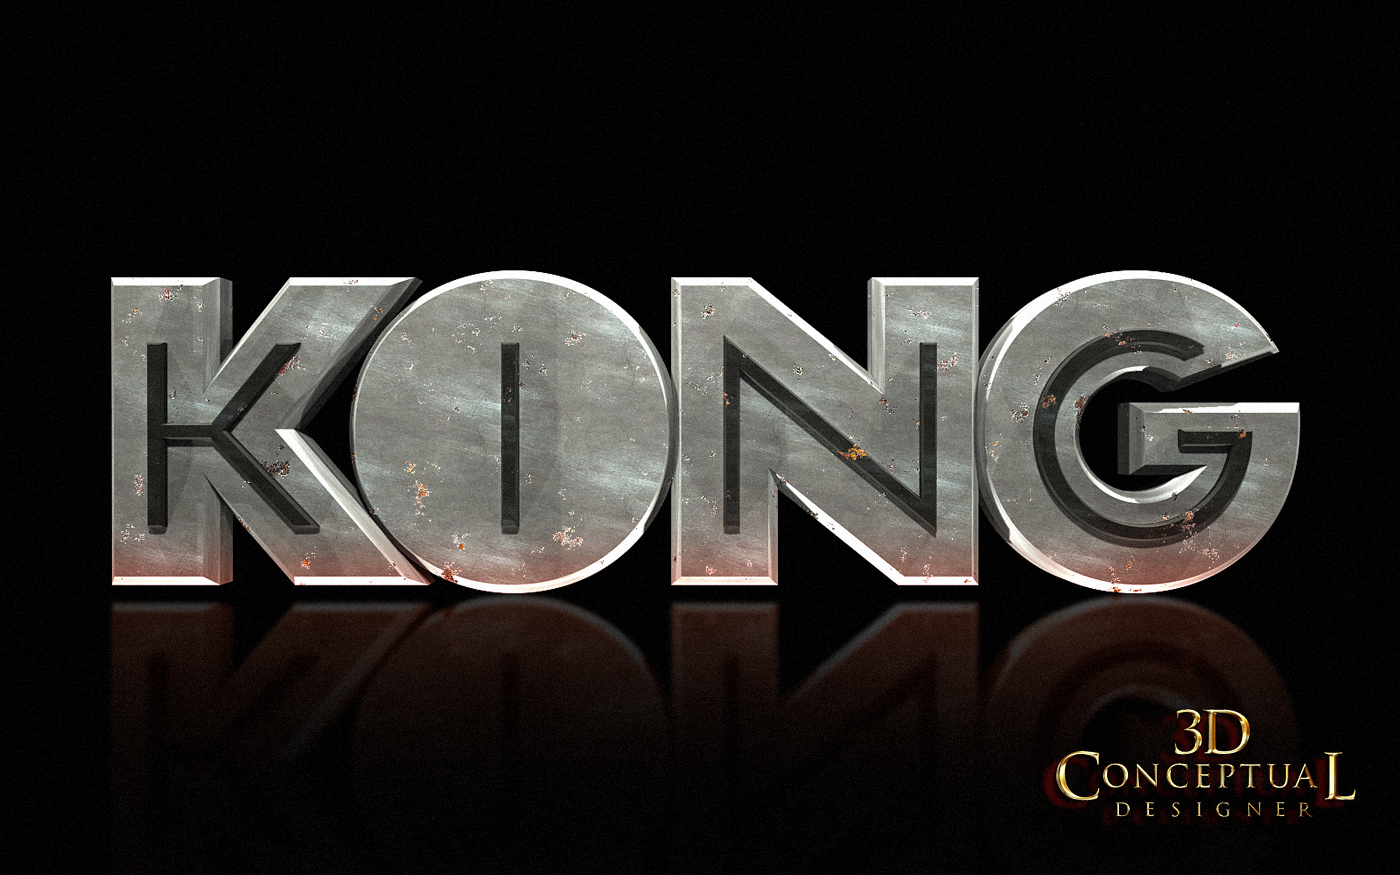 3DconceptualdesignerBlog: Project Review KING KONG[2005] 3D Logo Designs PART II